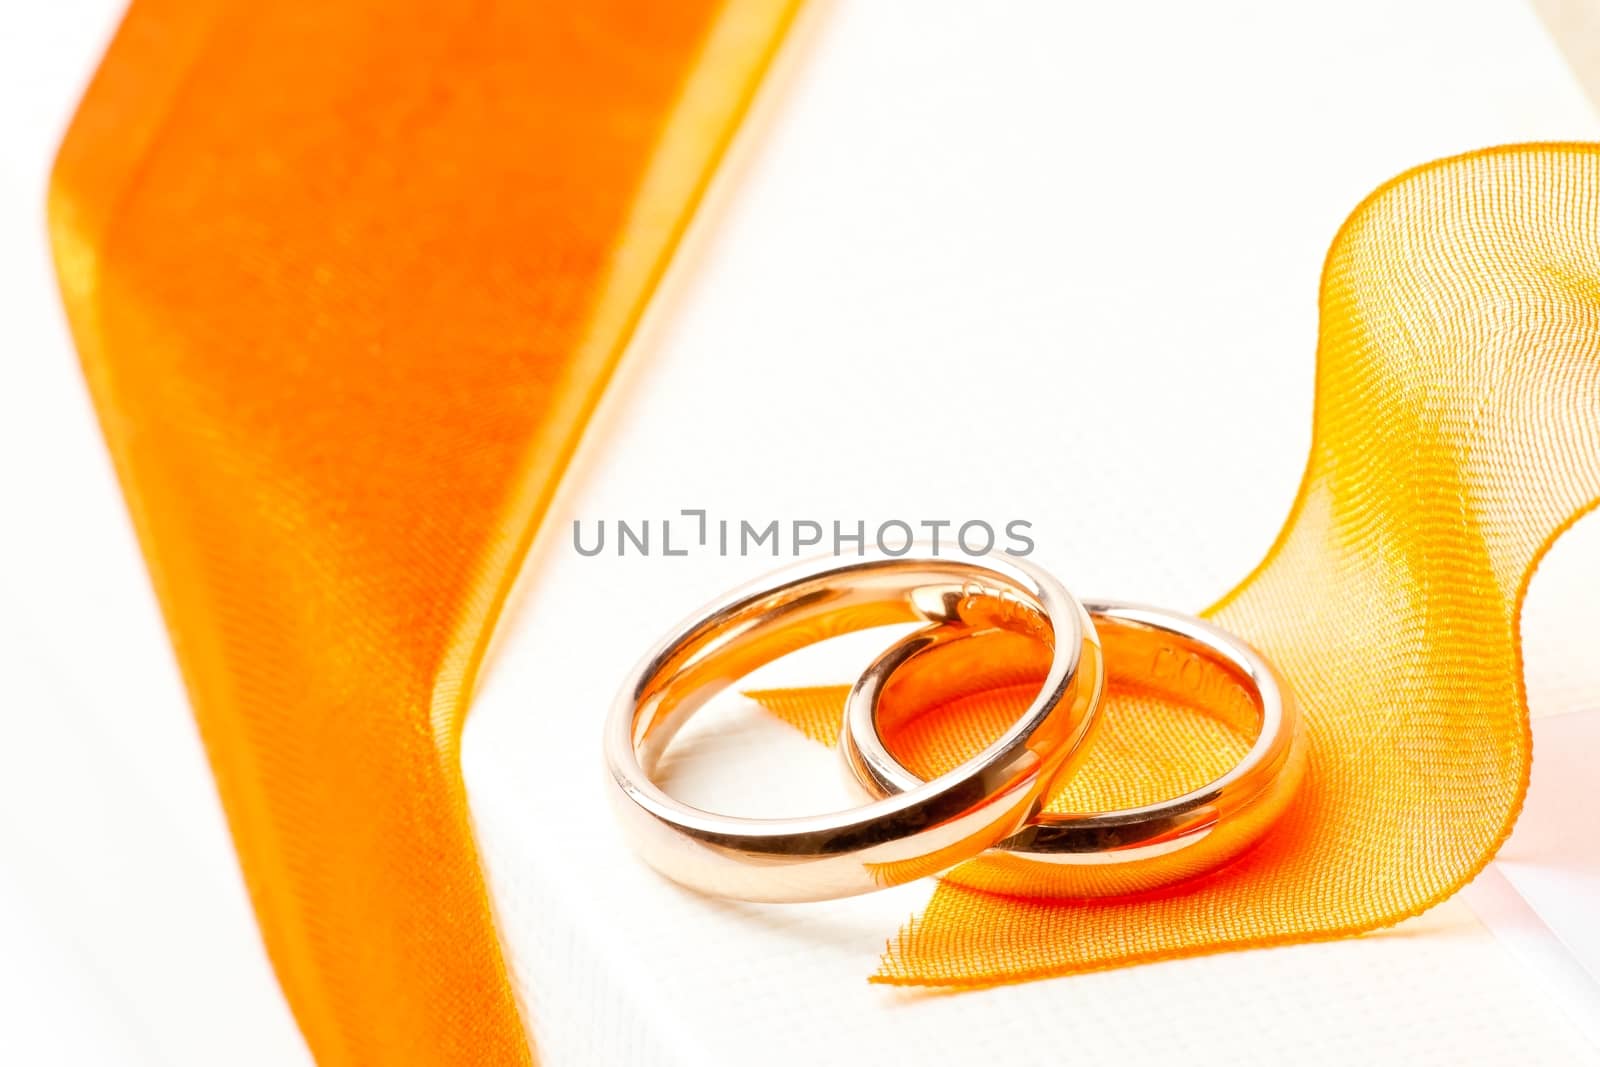 gold wedding rings near orange ribbon on white background